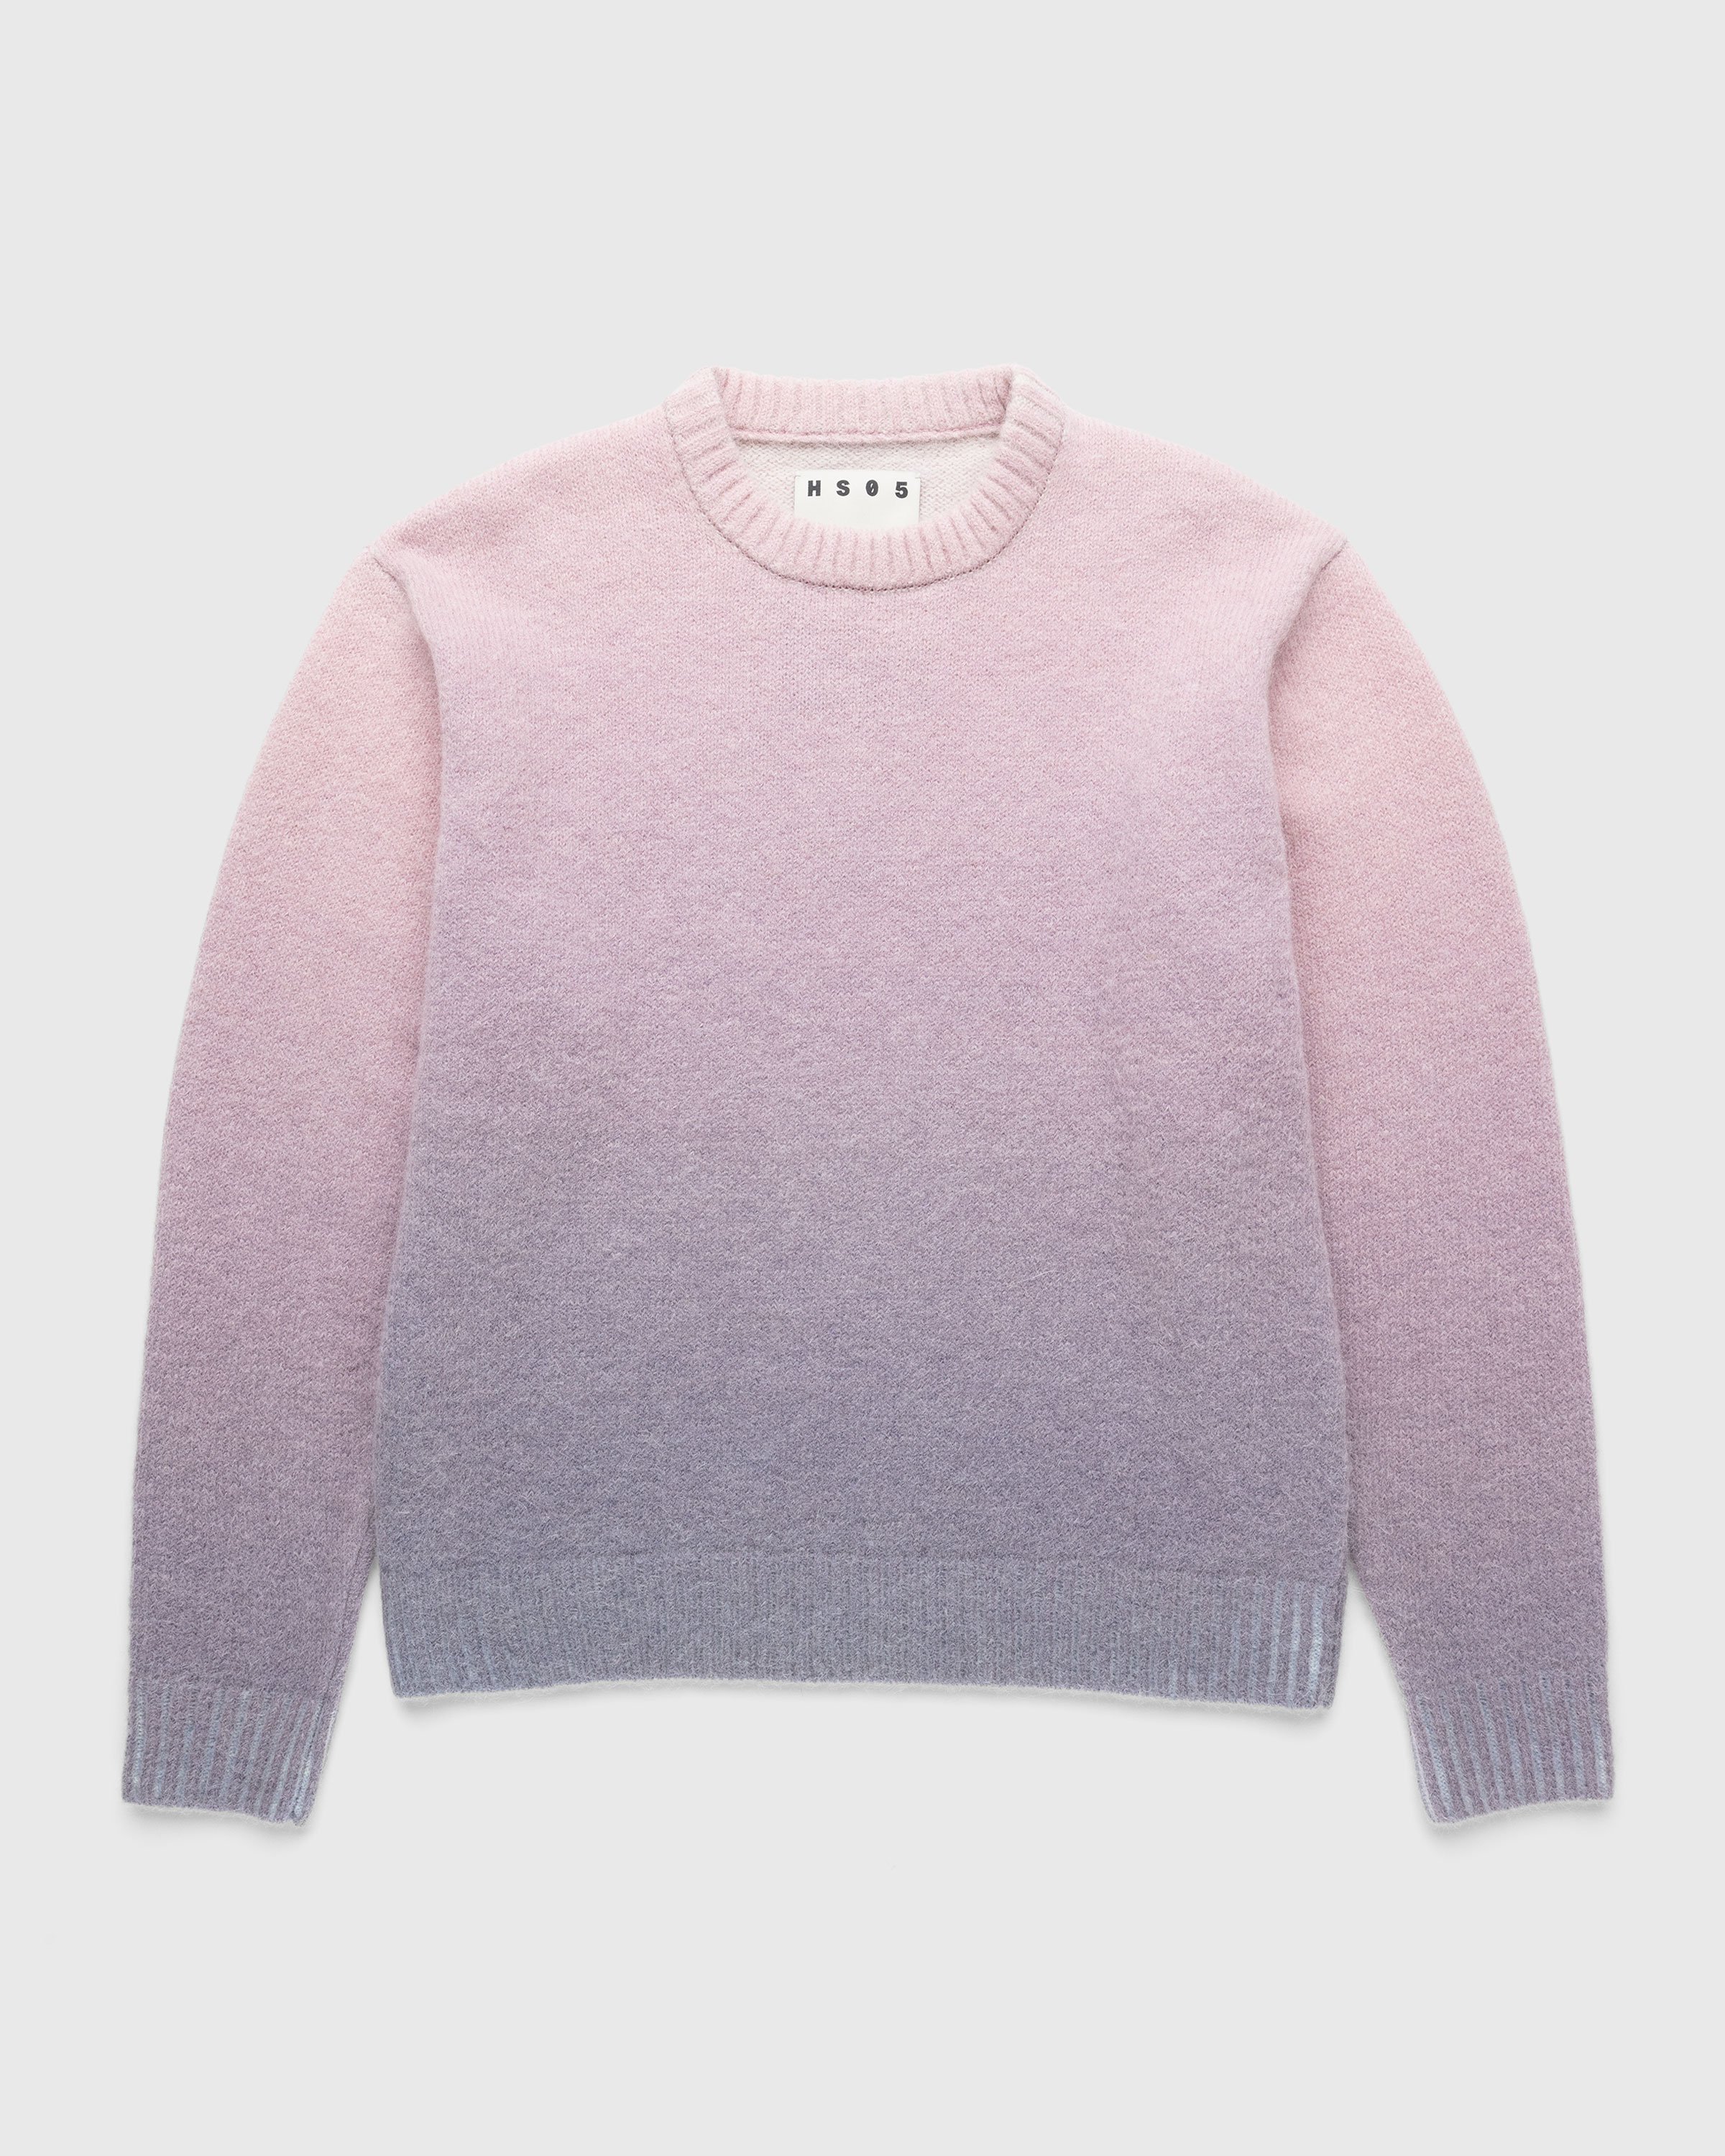 Highsnobiety HS05 - Alpaca Static Sweater Pink - Clothing - Pink - Image 1